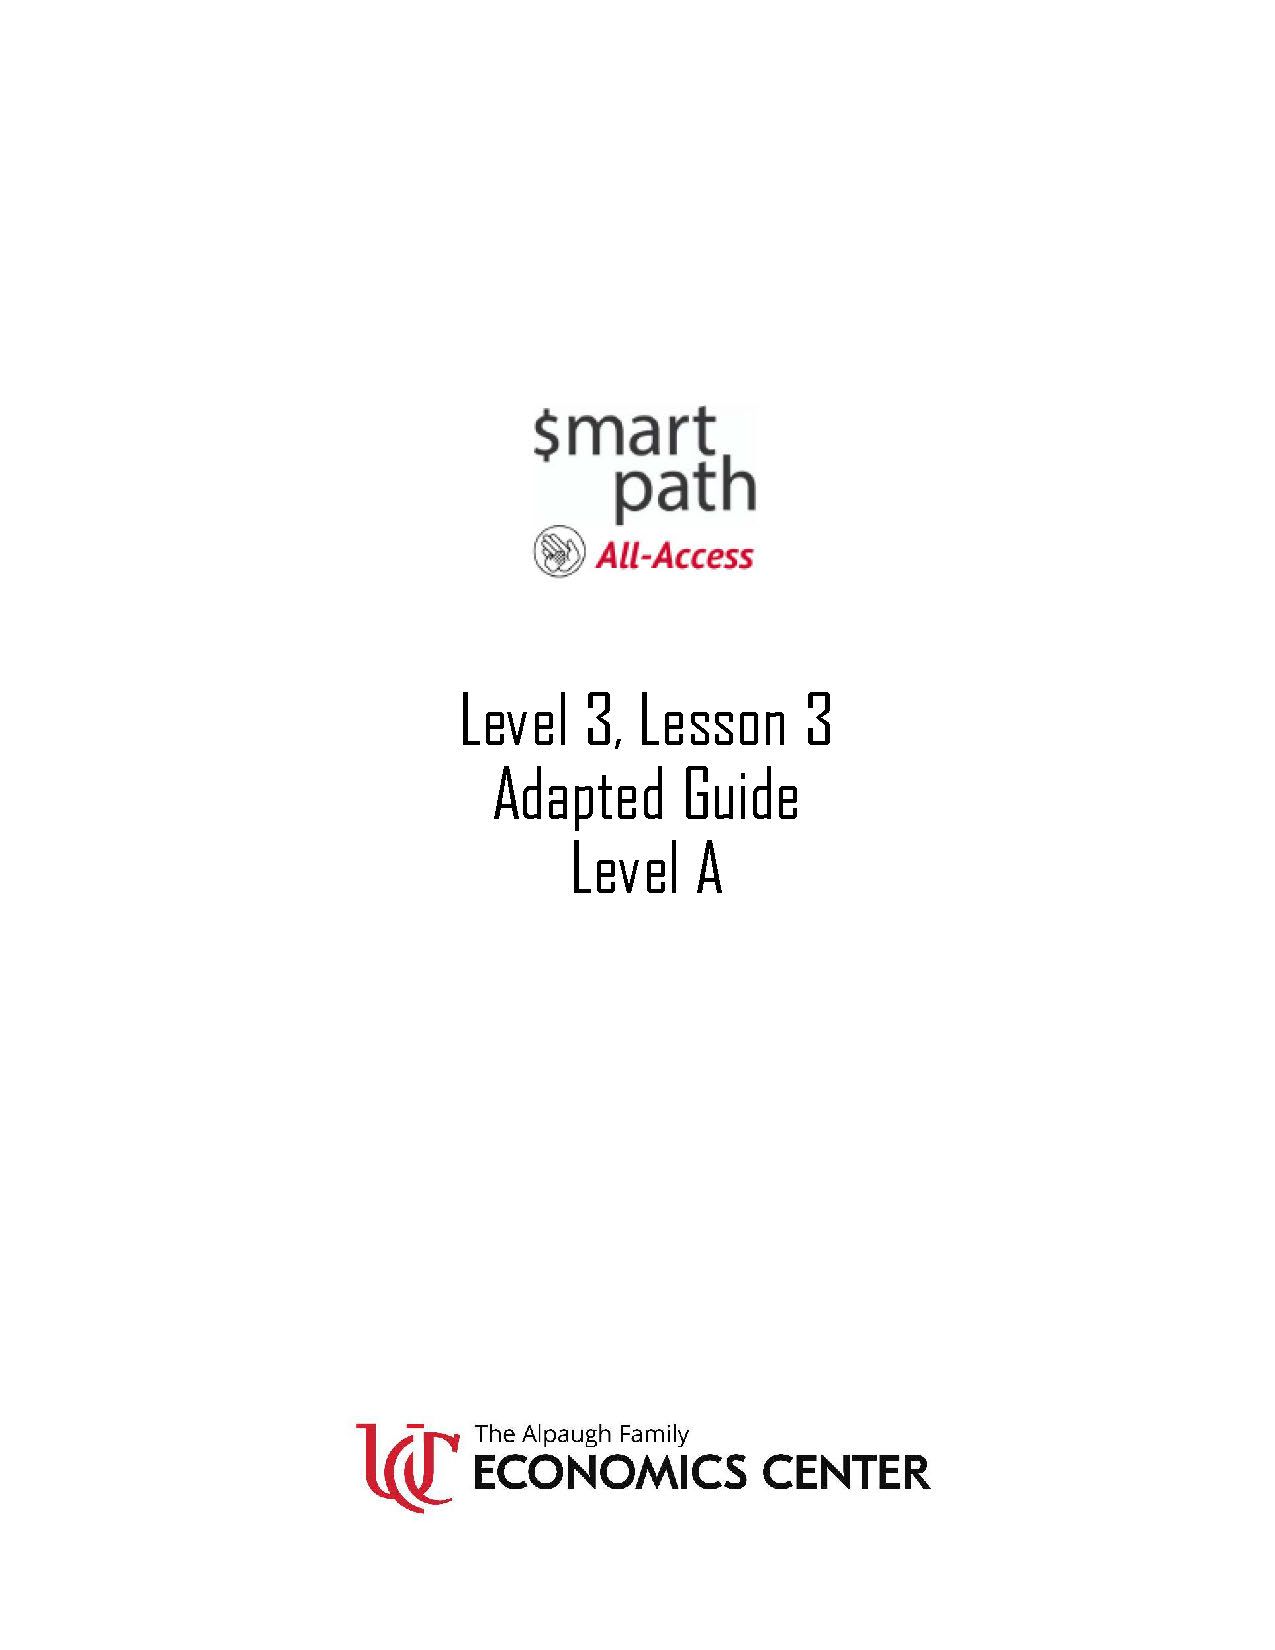 Level 3 Lesson 3 cover